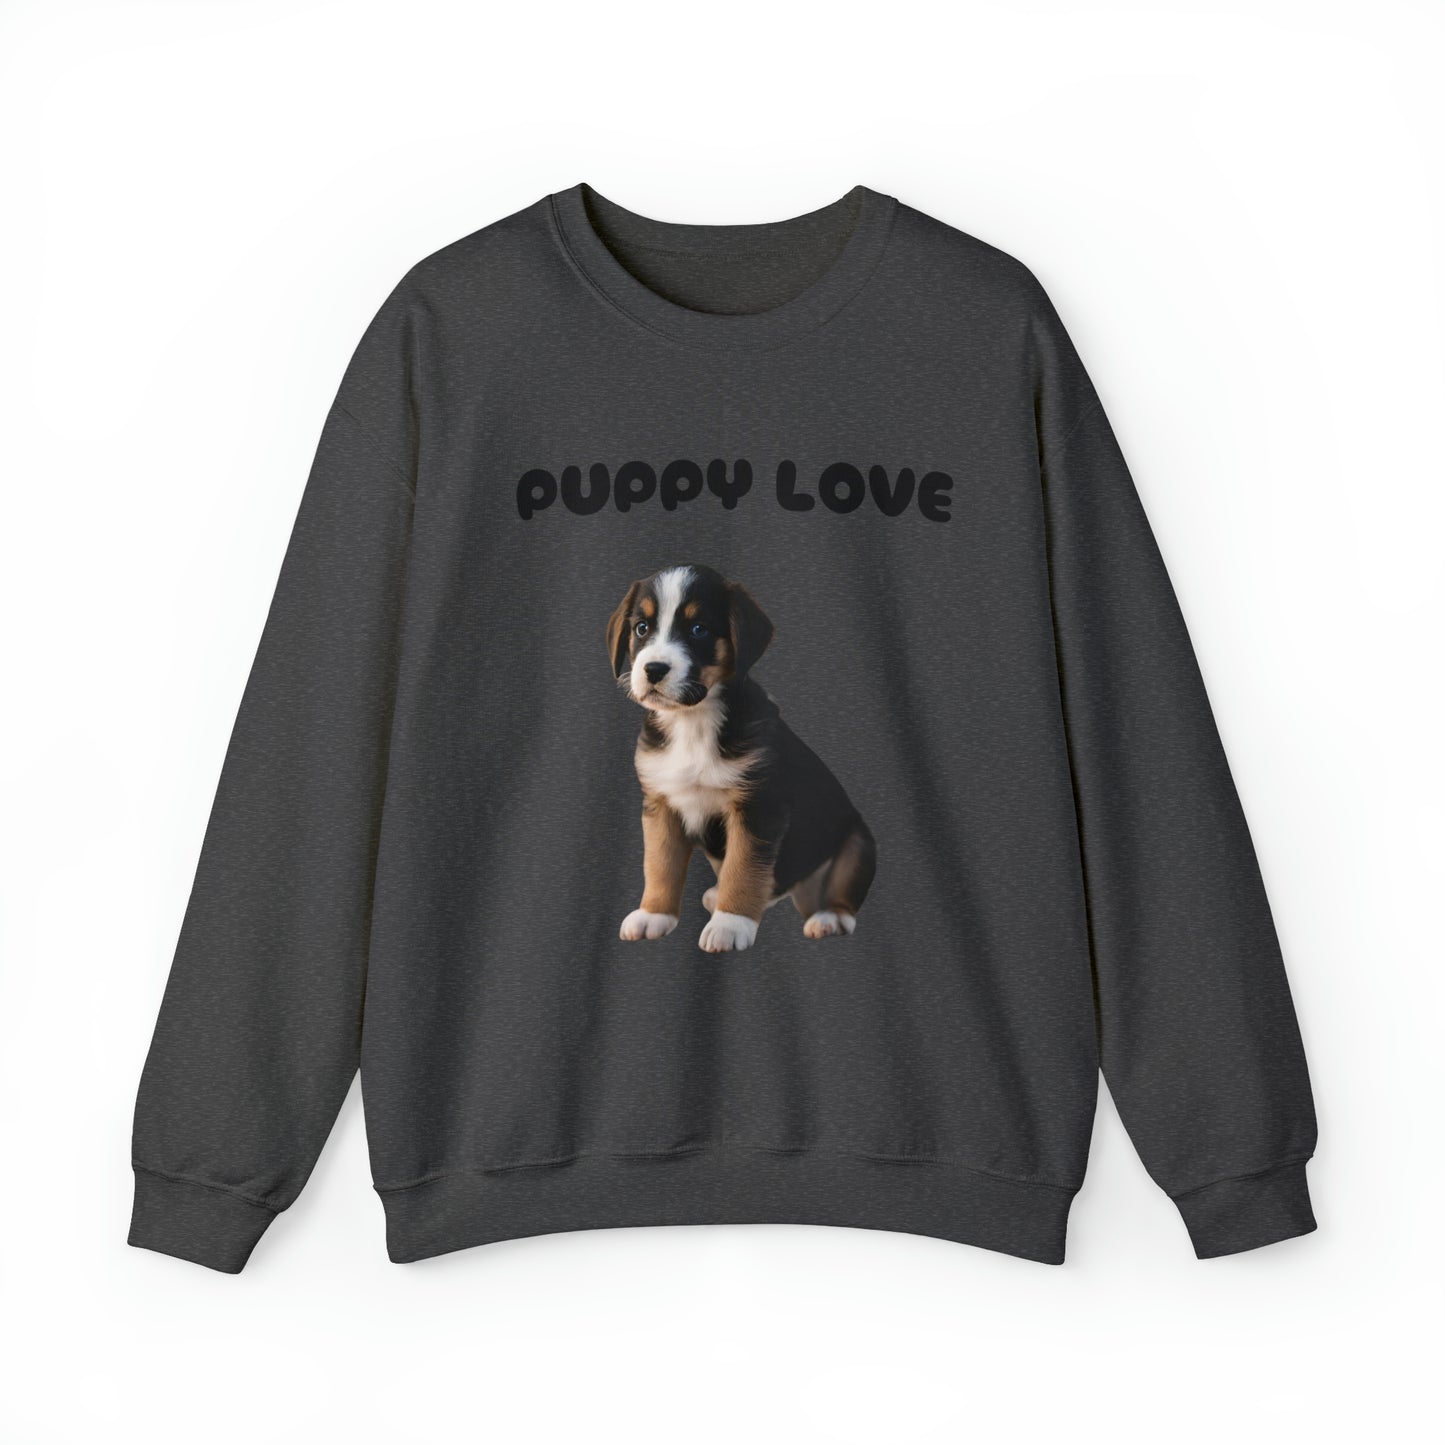 Puppy Love Sweatshirt For Dog Lovers